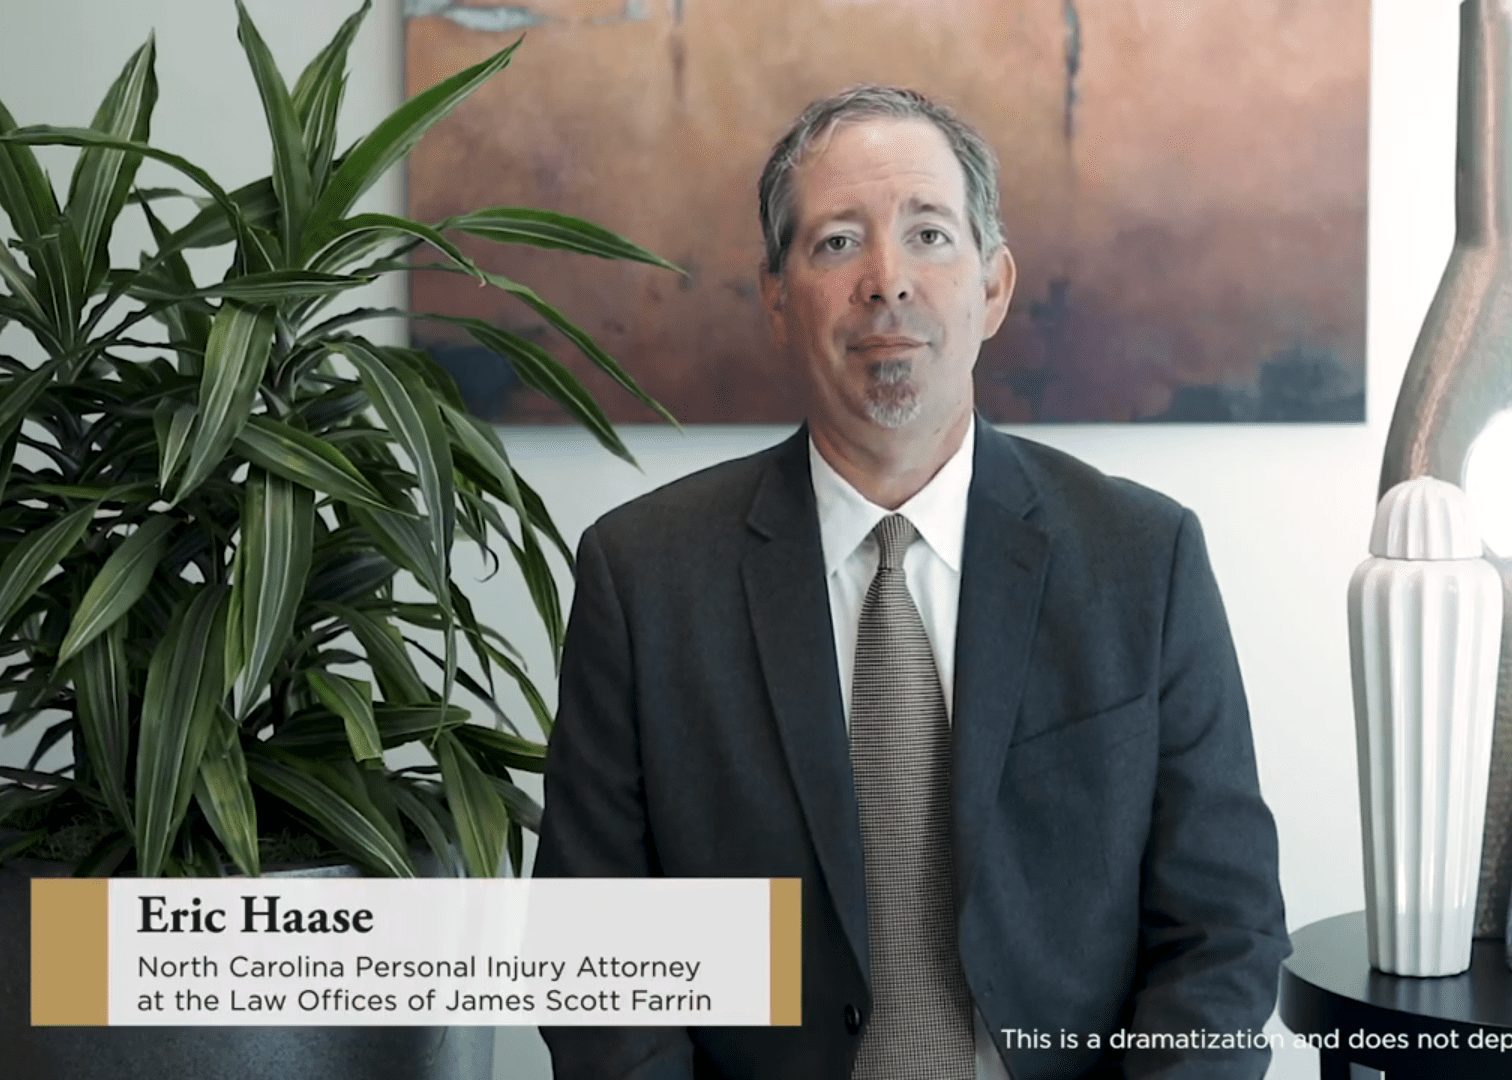 Eric Haase discuses Personal Injury Basics for North Carolina